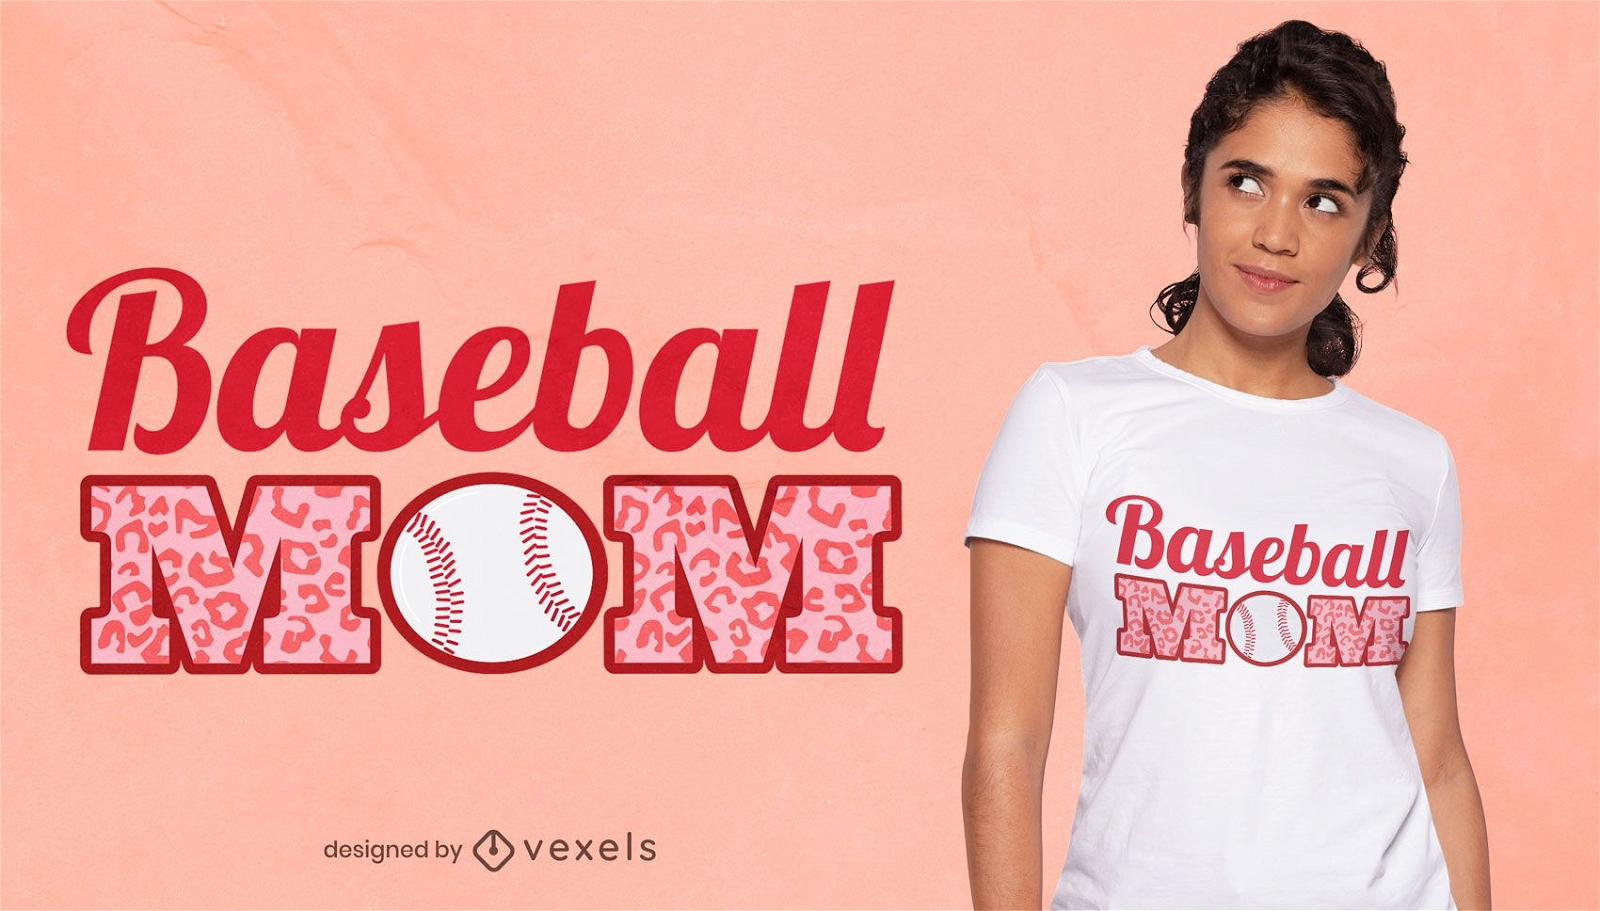 Baseball mom quote fun t-shirt design